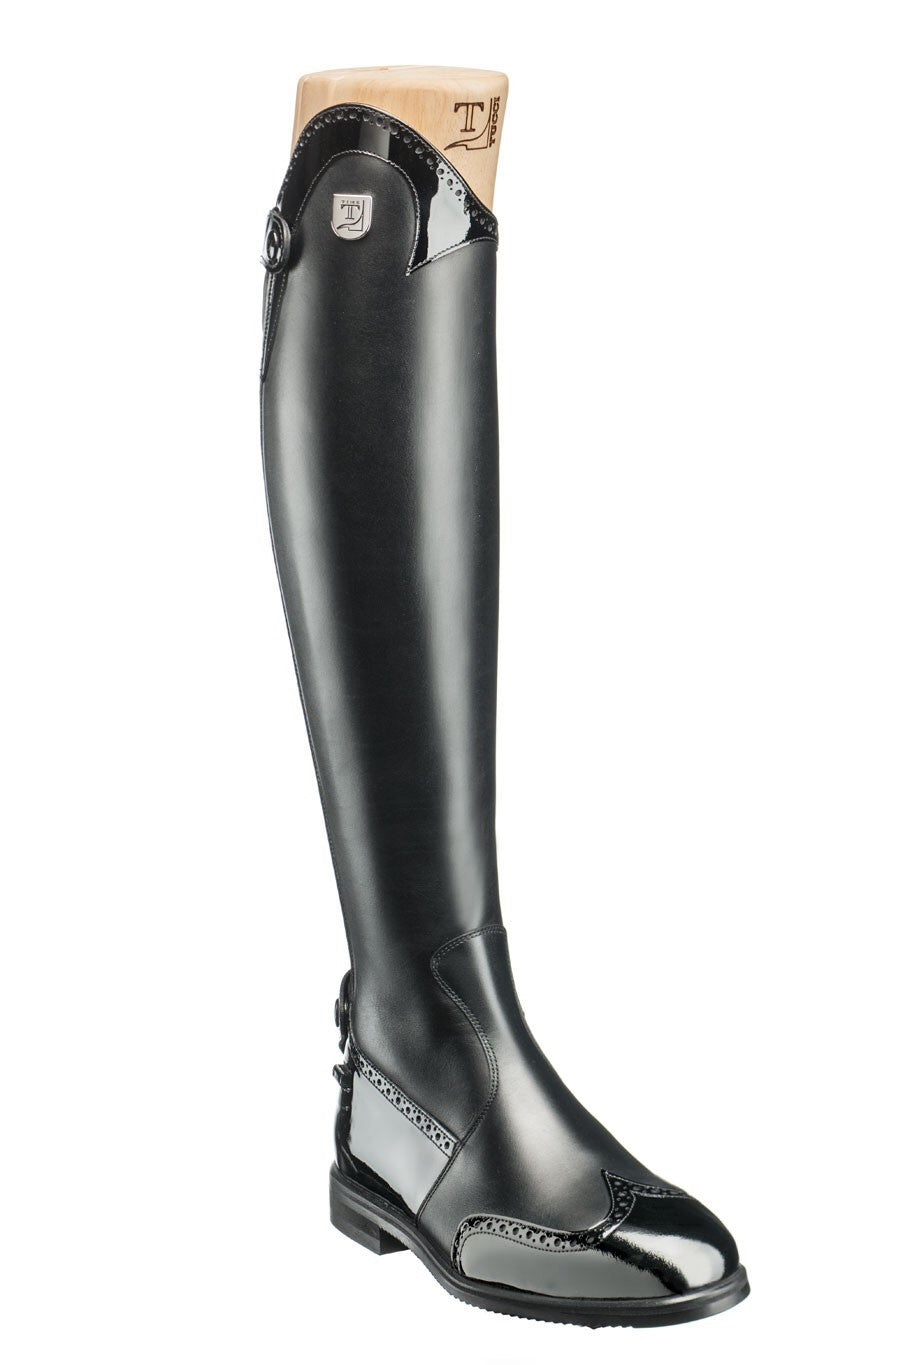 Tucci Marilyn Tall Fancy Dress Boot - Luxe EQ